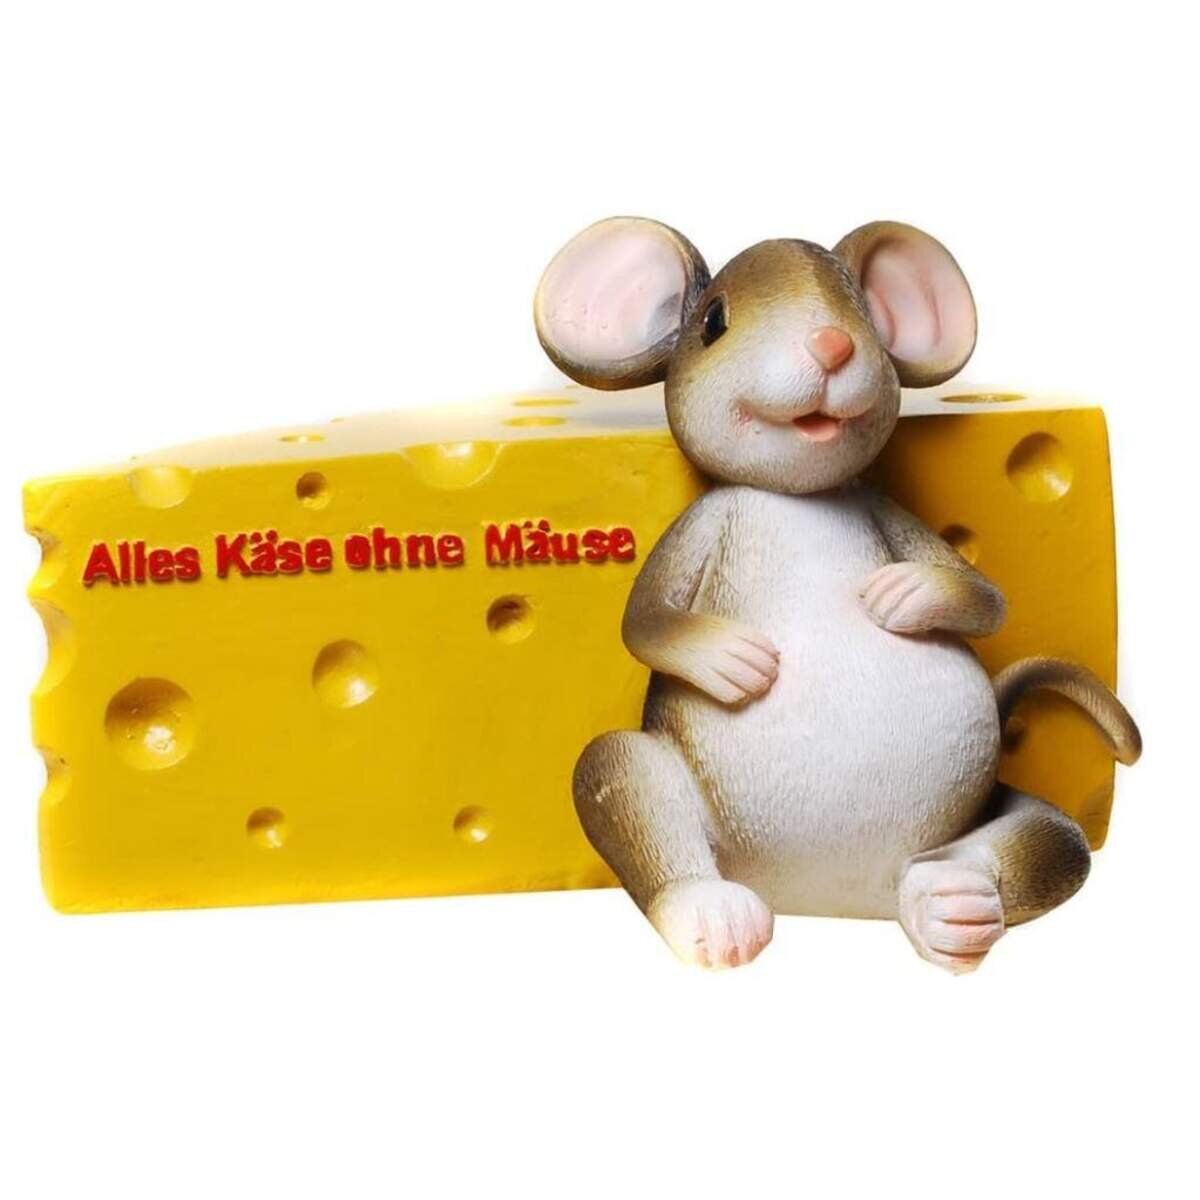 Udo Schmidt Sparbüchse / Spardose "Alles Käse ohne Mäuse"